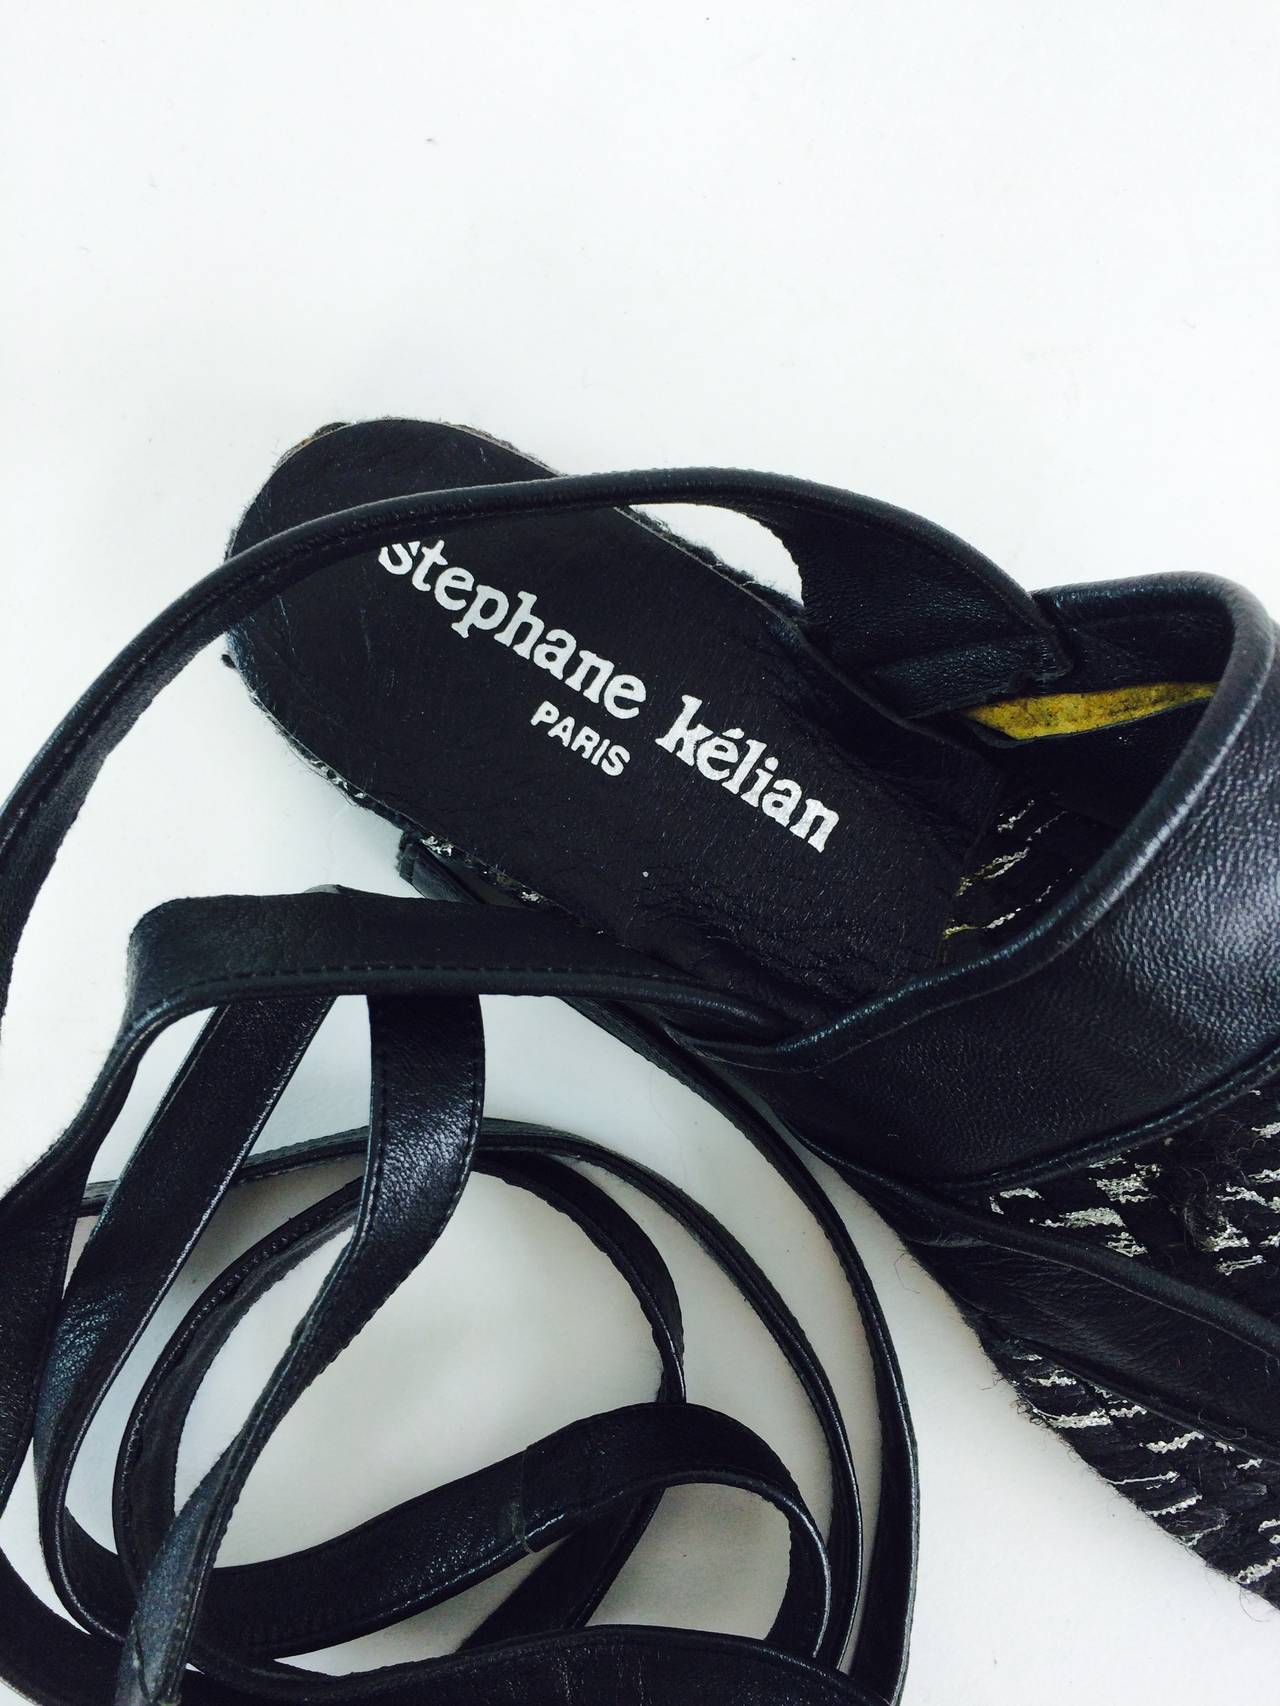 Women's Stephane Keilan black leather & jute leg wrap espadrilles